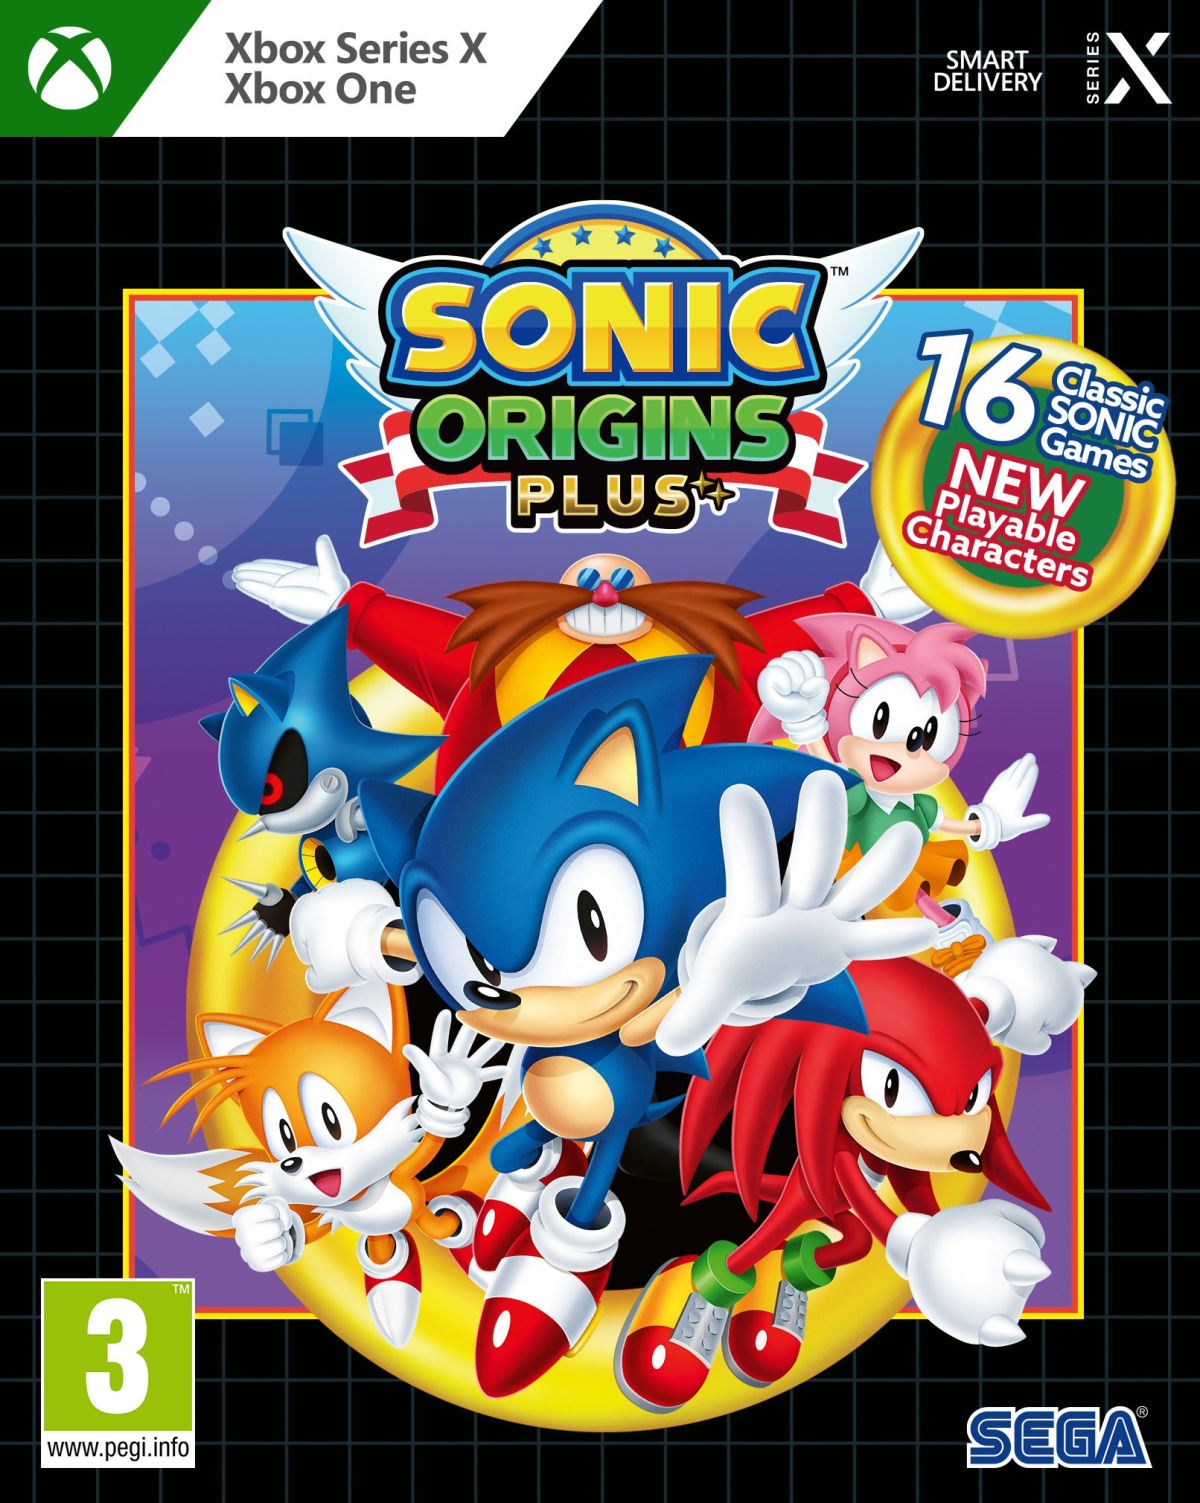 XBOXOne/SeriesX Sonic Origins Plus Limited Edition